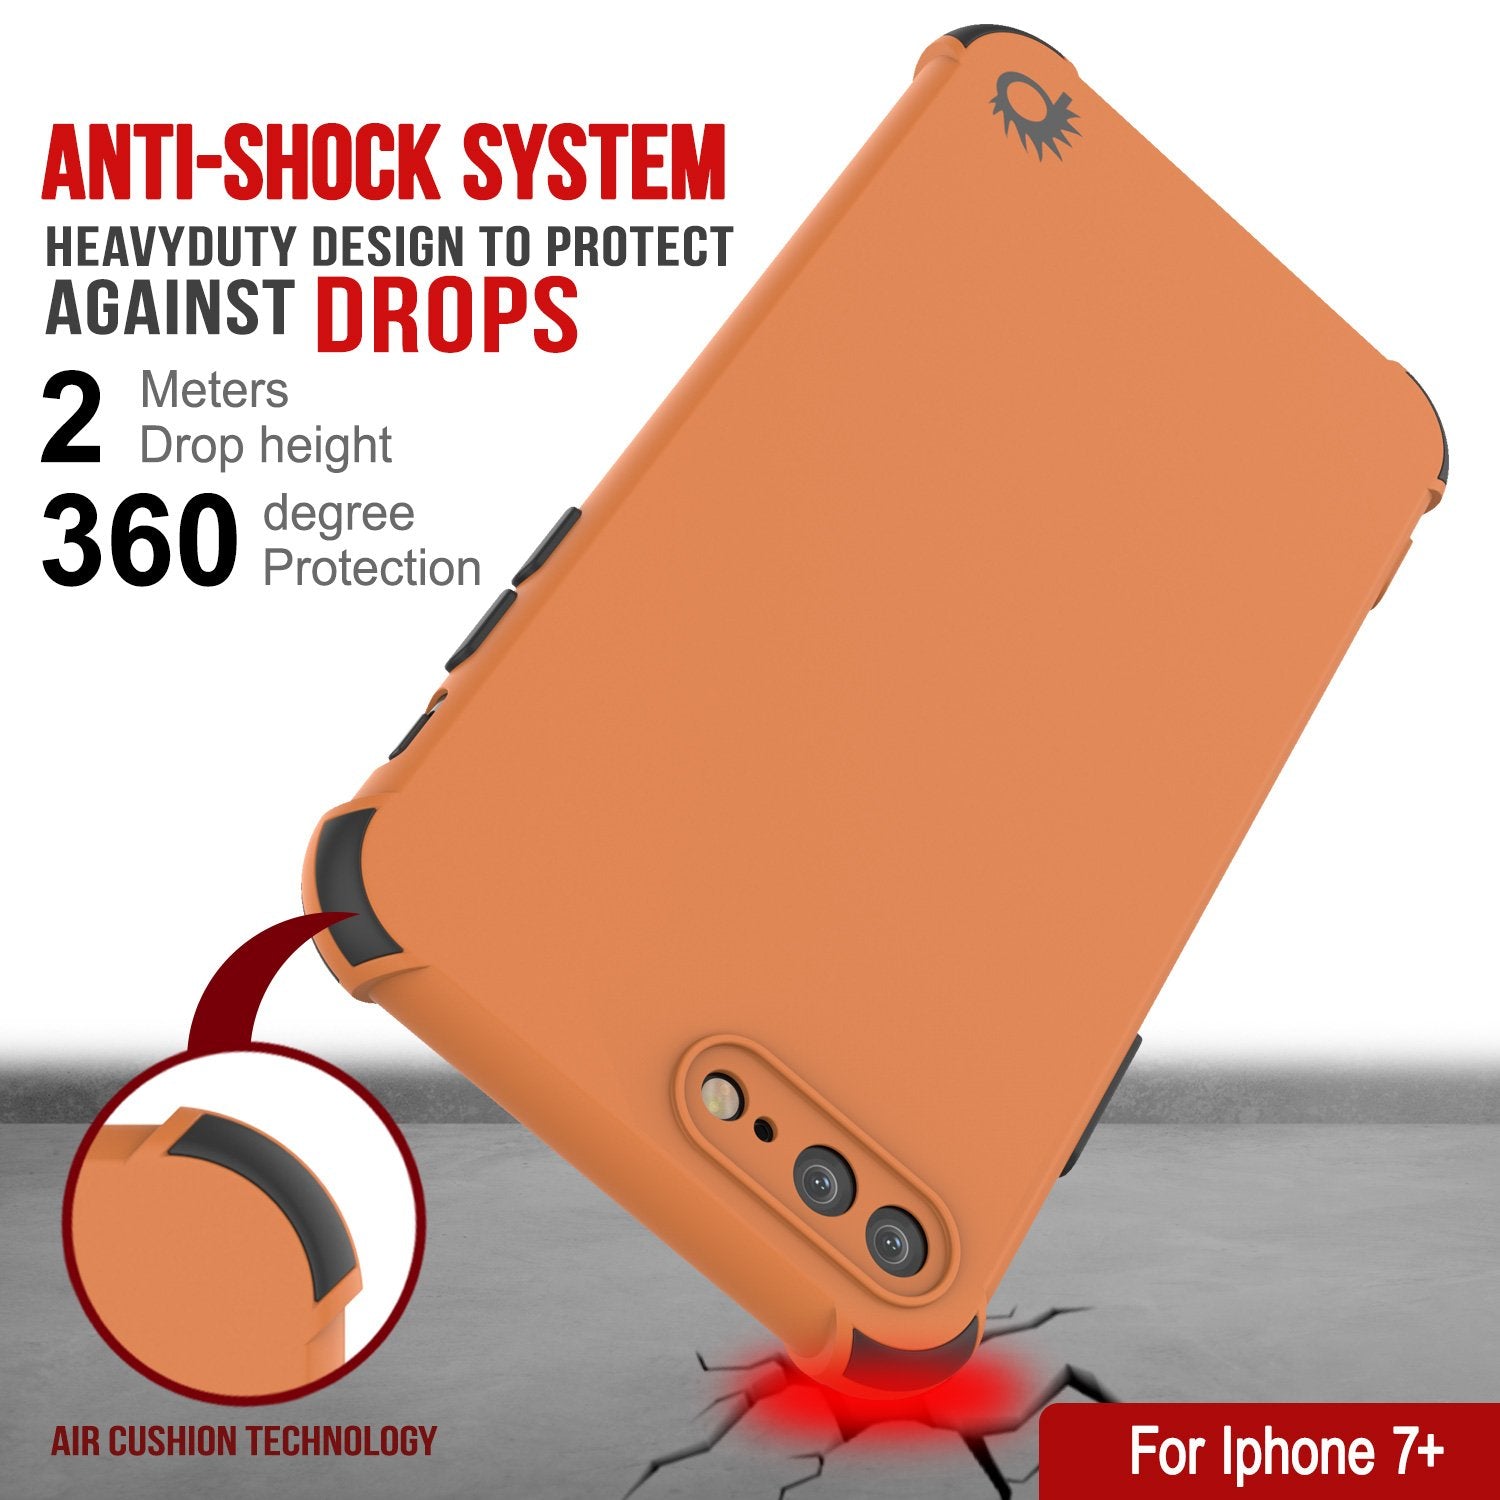 Punkcase Protective & Lightweight TPU Case [Sunshine Series] for iPhone 7+ Plus [Orange]